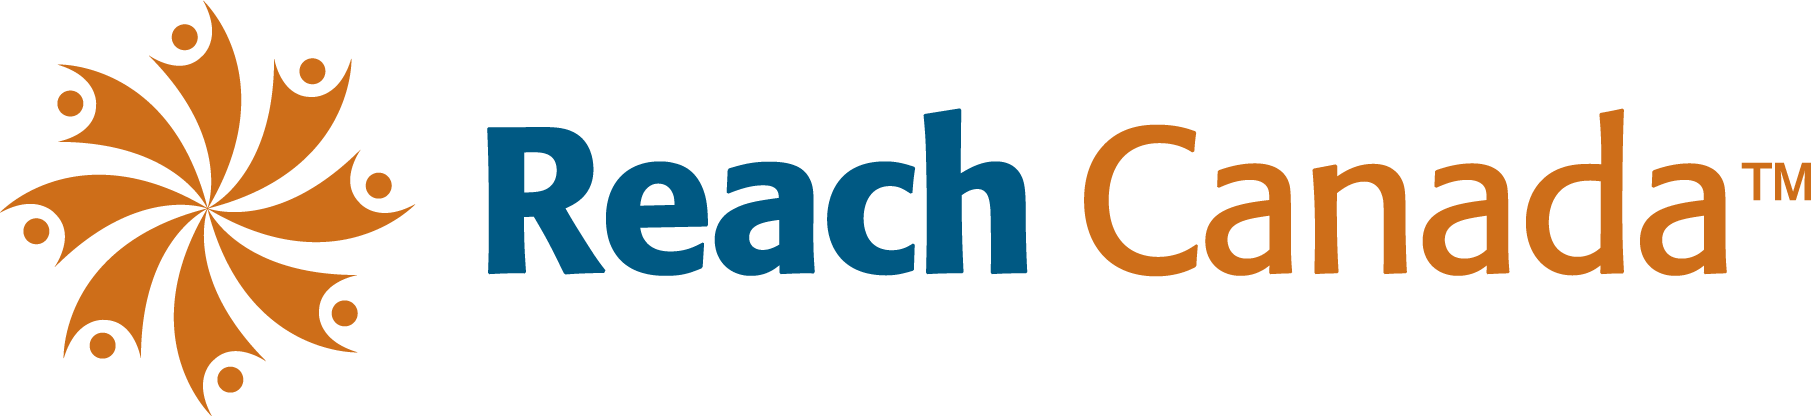 Reach Canada logo